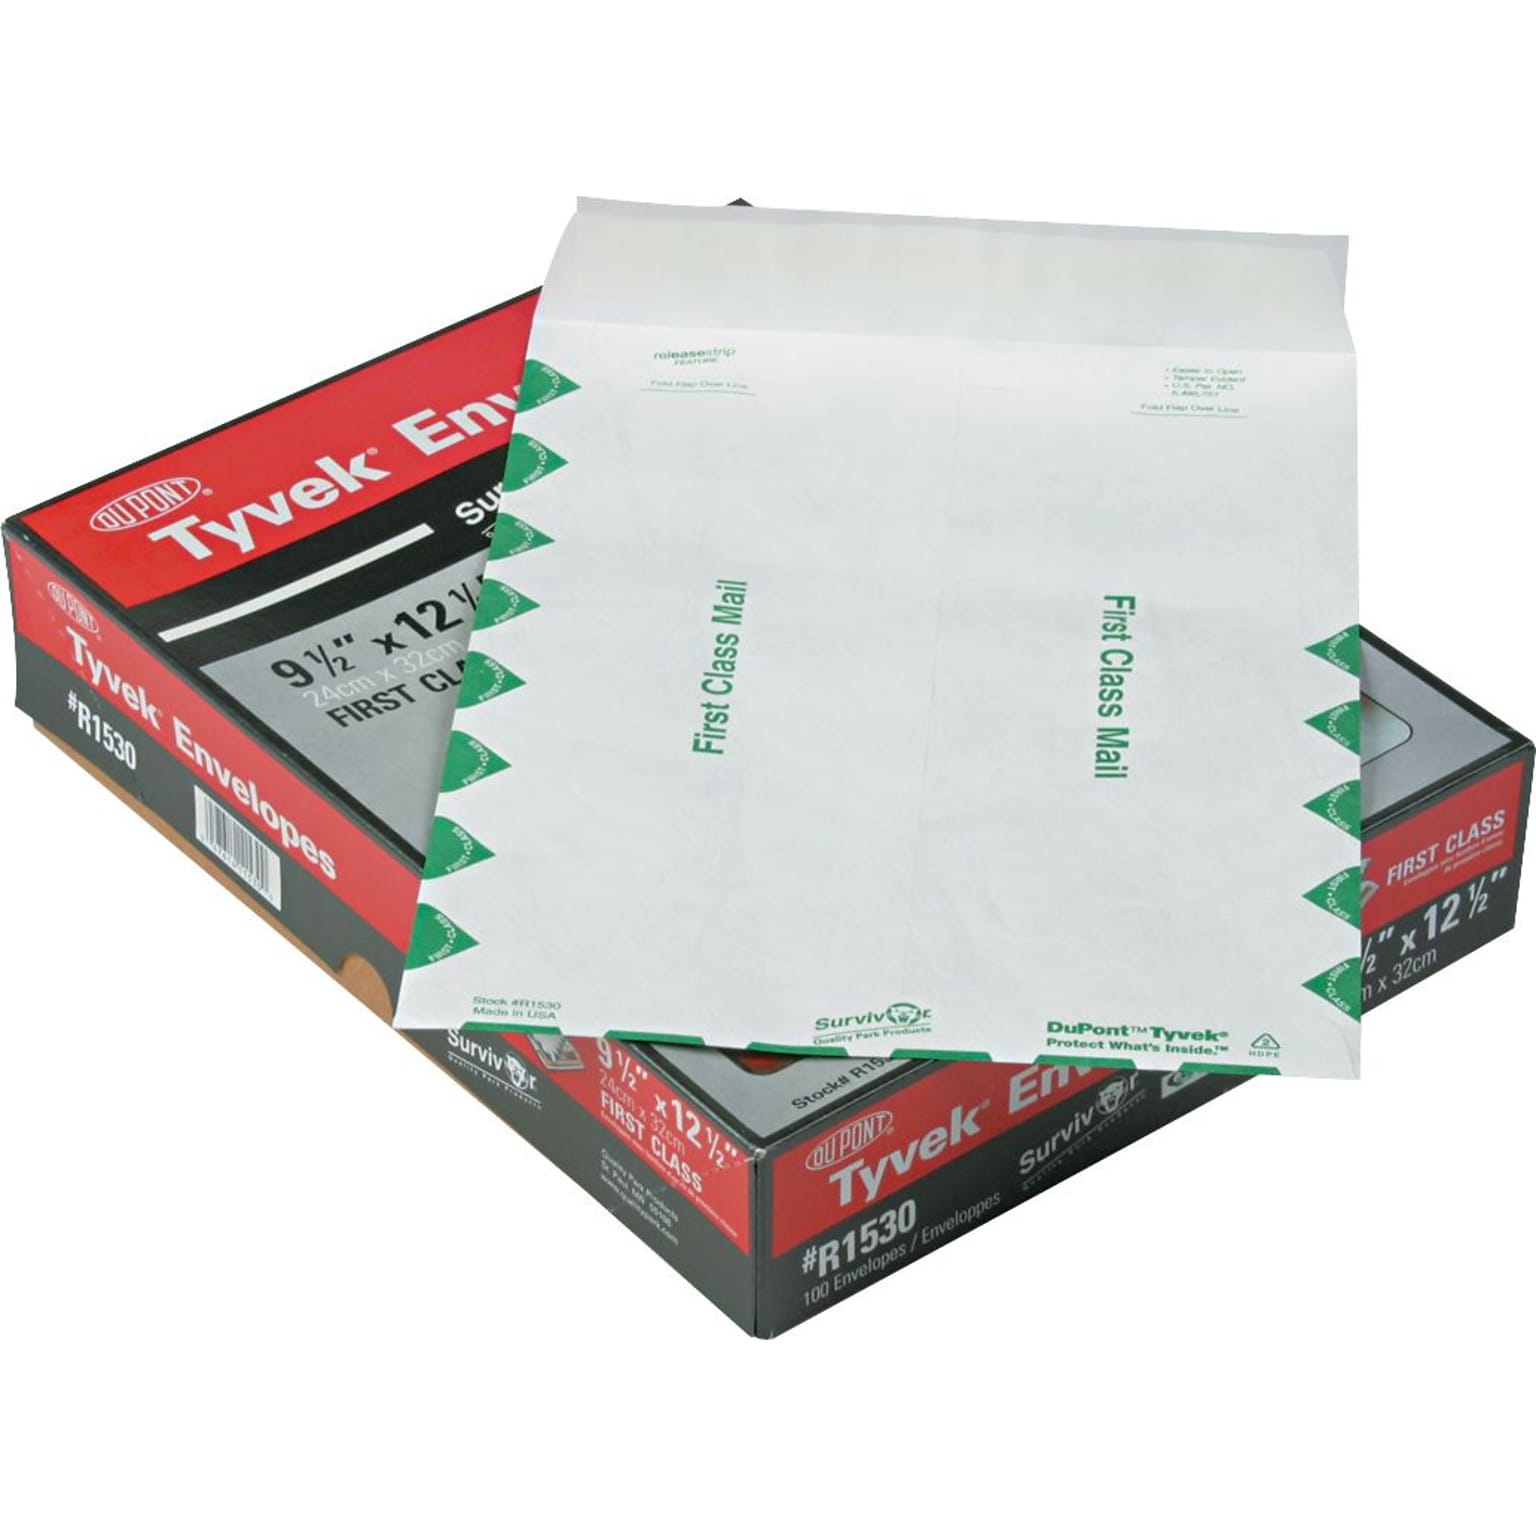 Quality Park Survivor First Class Tyvek Self Seal Catalog Envelope, 9 1/2 x 12 1/2, White, 100/Box (QUAR1530)